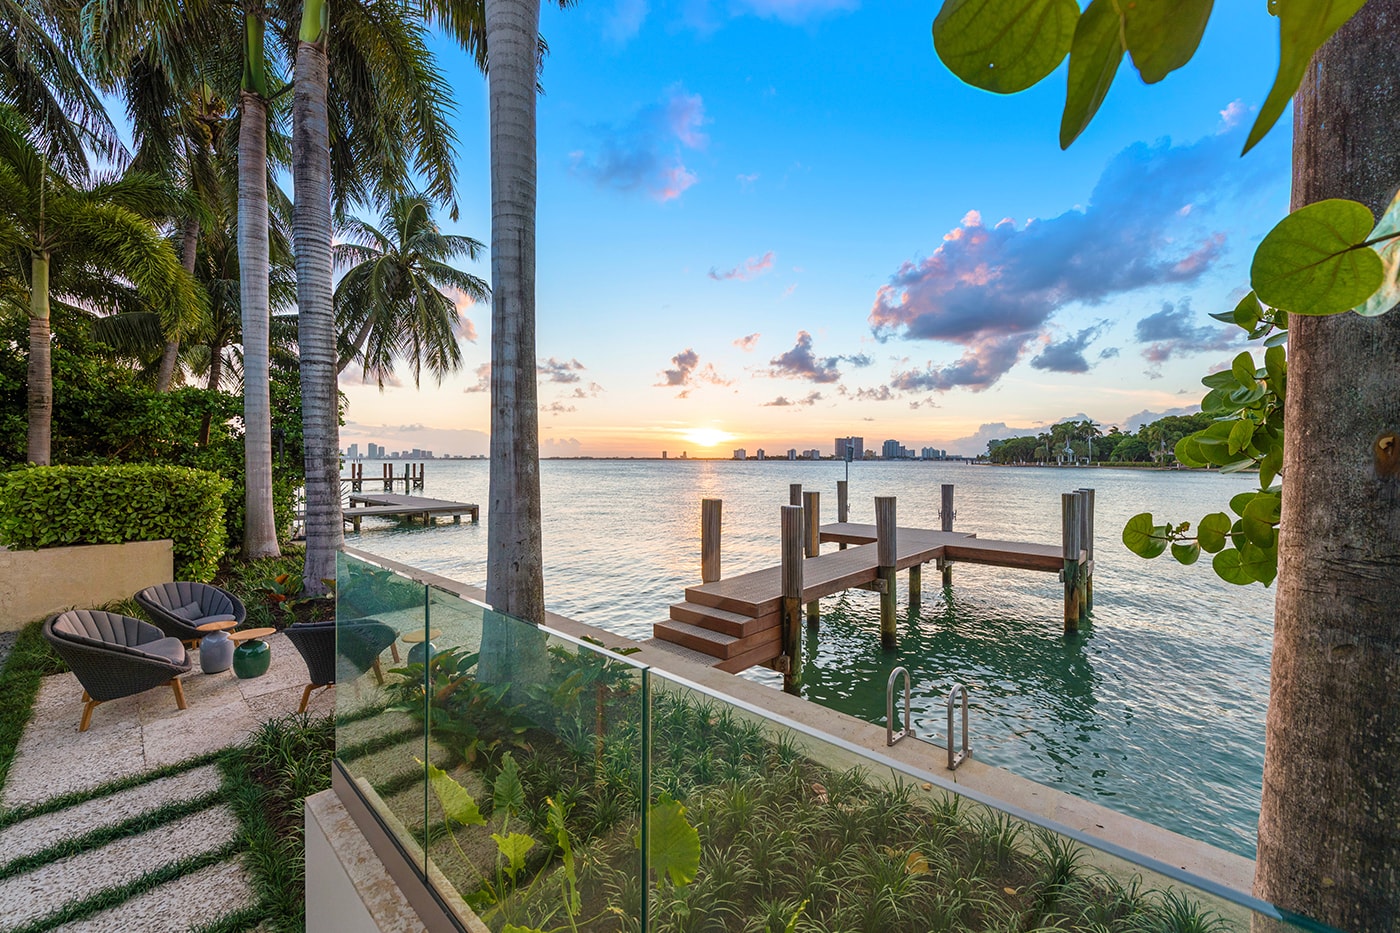 Chris Bosh 位於 Miami 豪華住宅將以 $4,200 萬美金出售